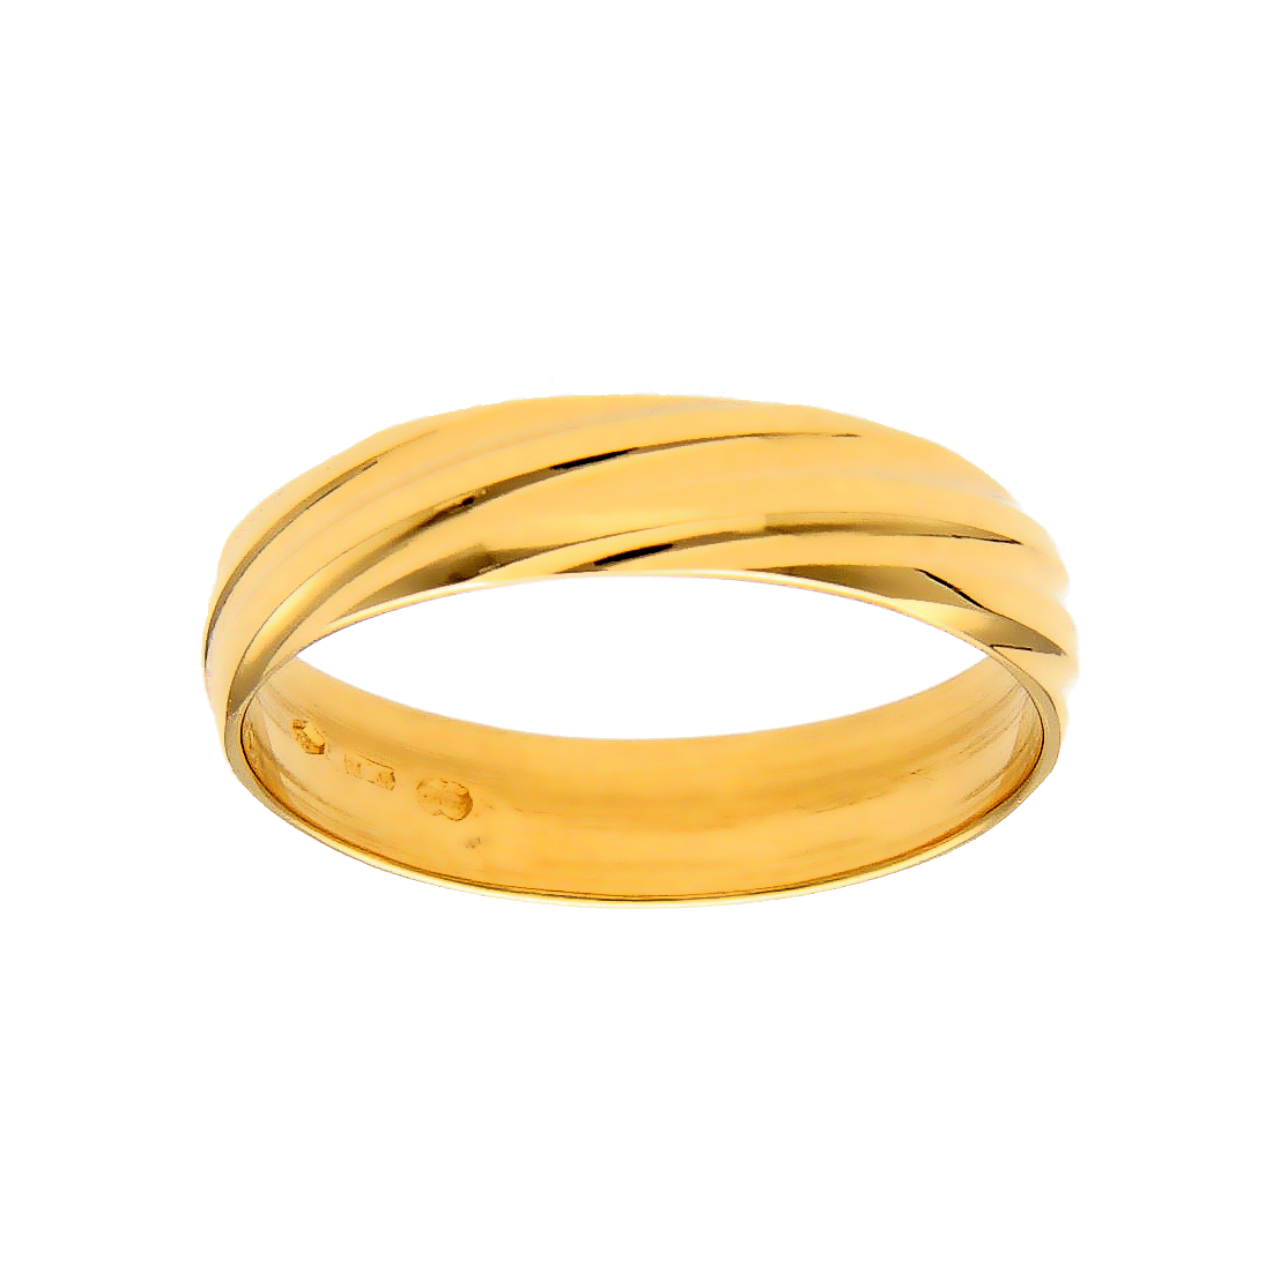 Elaborate Yellow Gold Ring